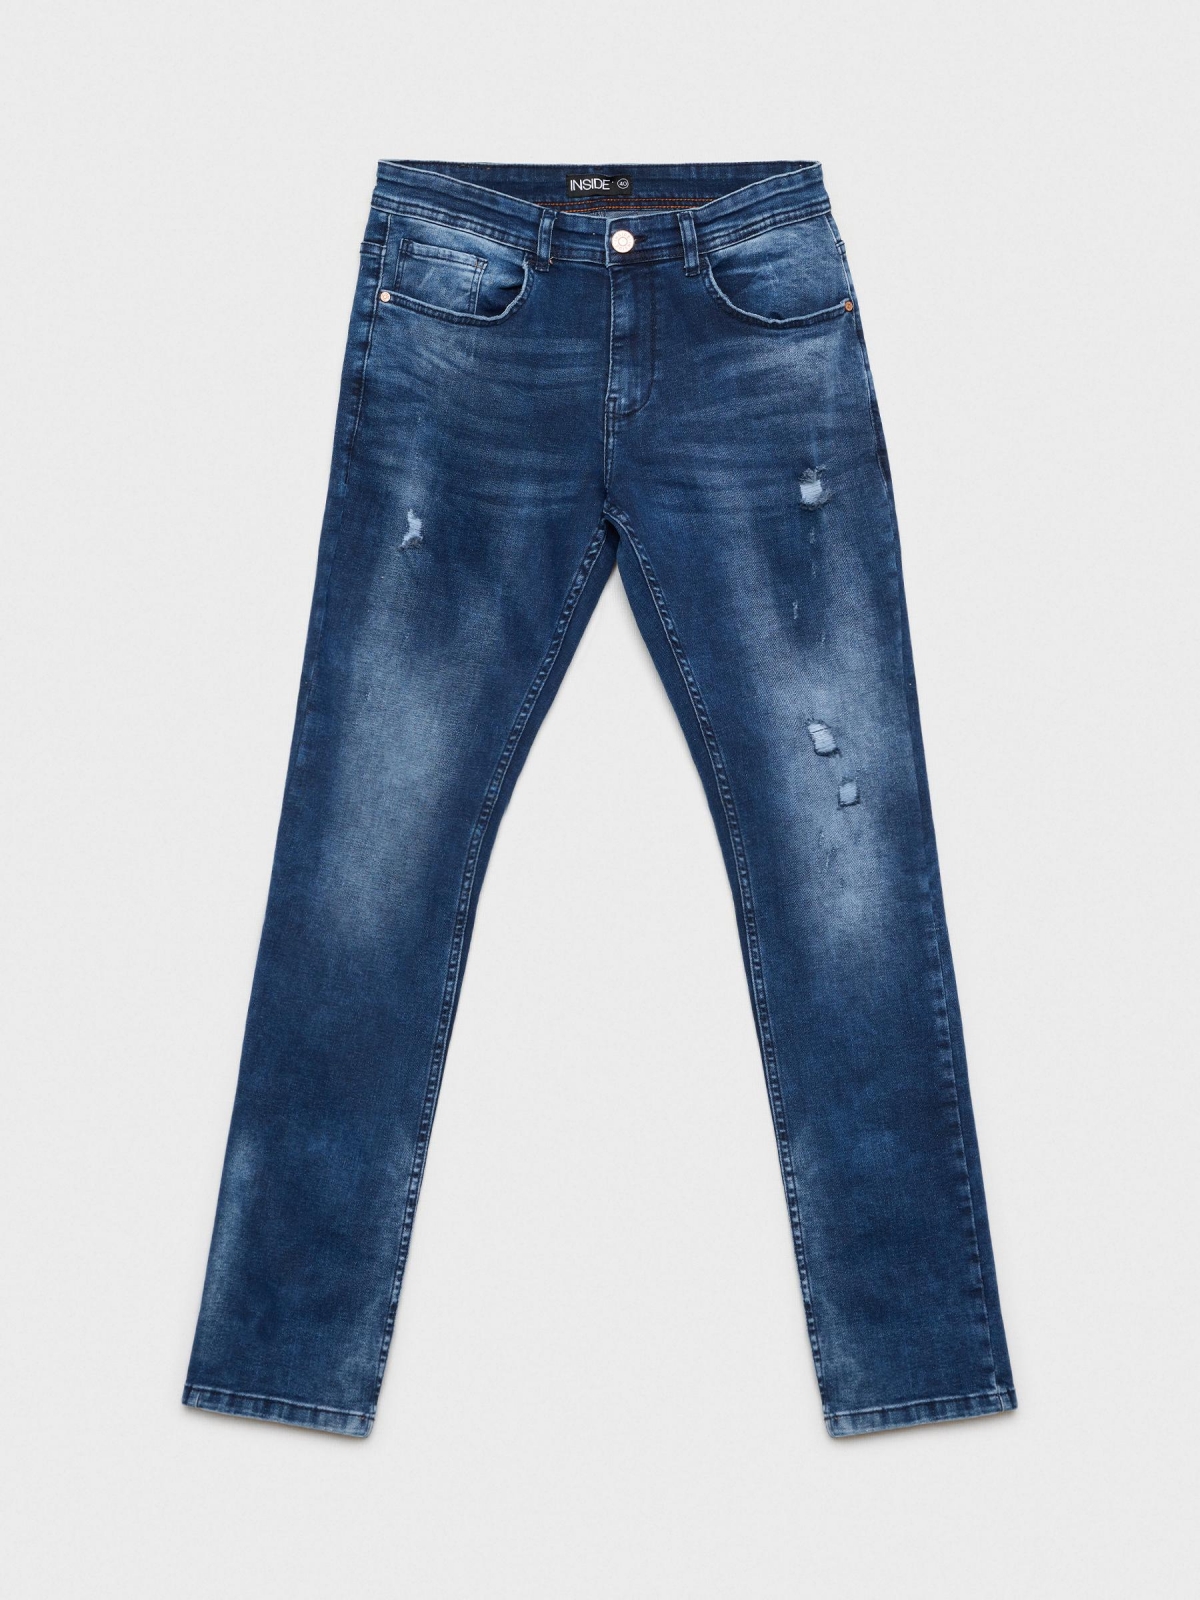  Jeans slim desgastados rotos azul marino